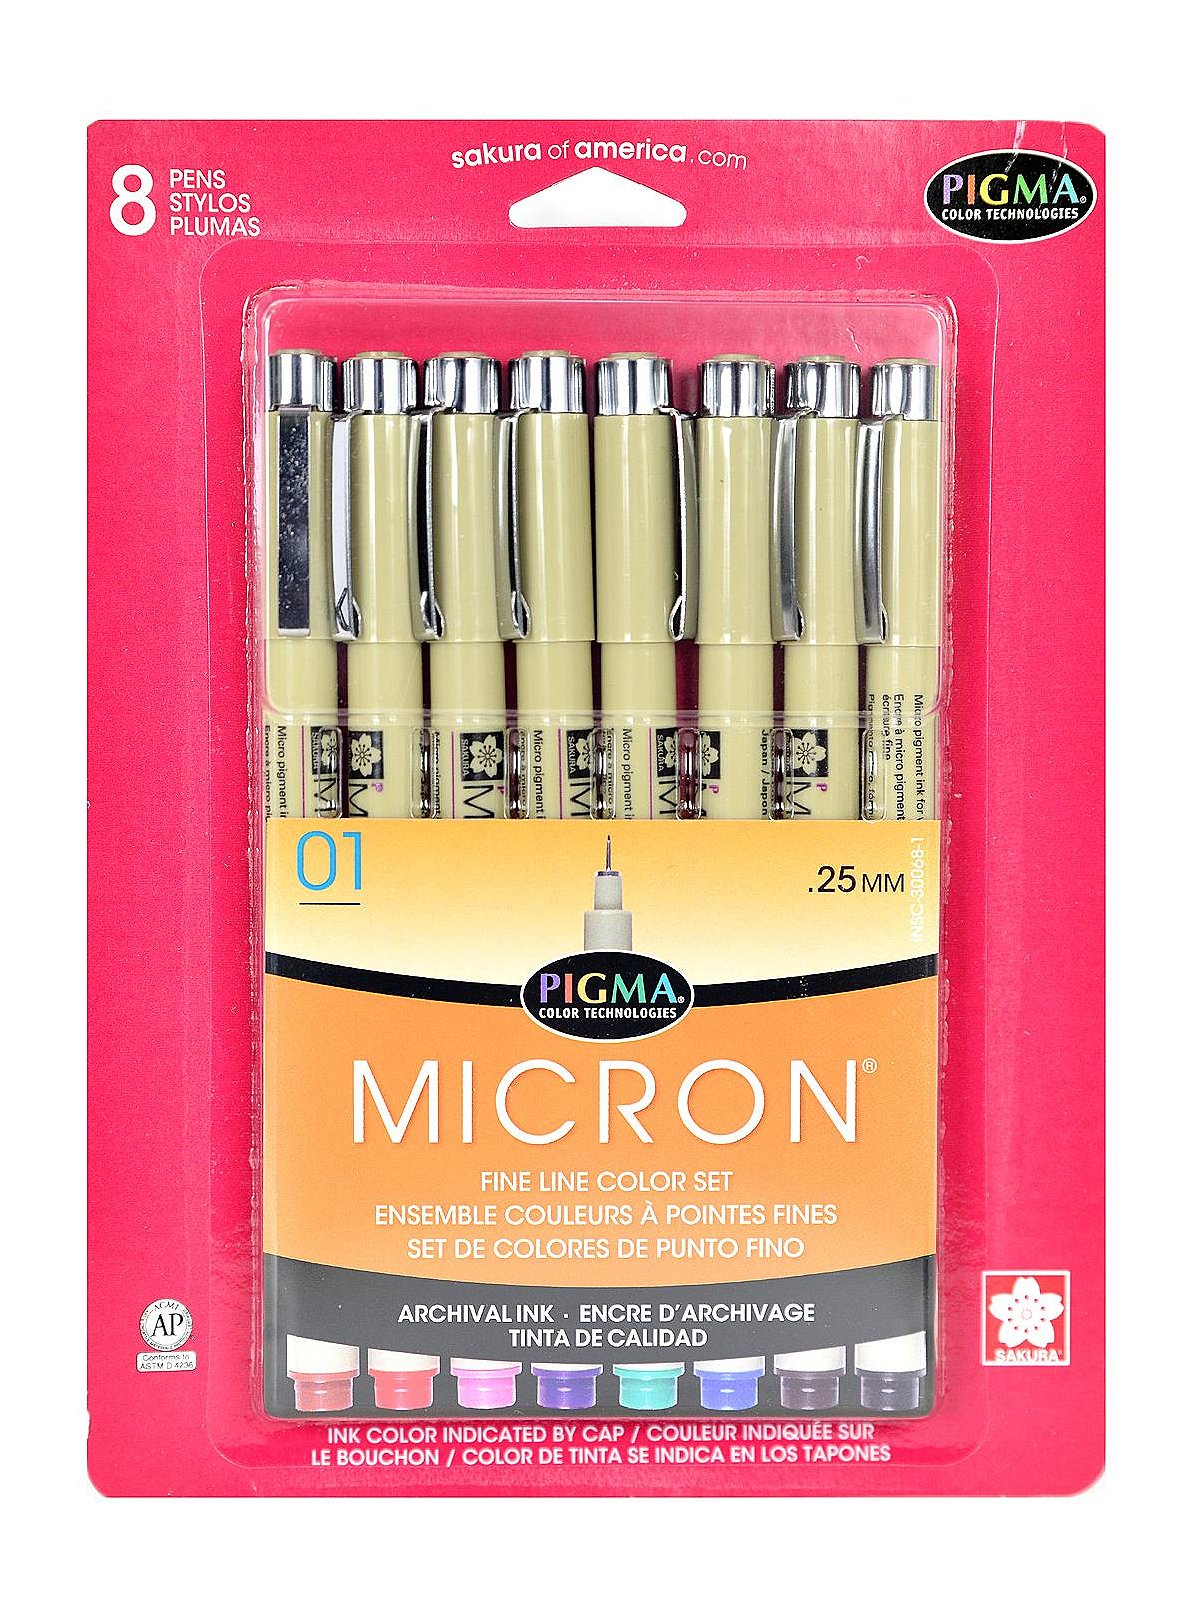 Sakura Pigma Micron Pens and Sets